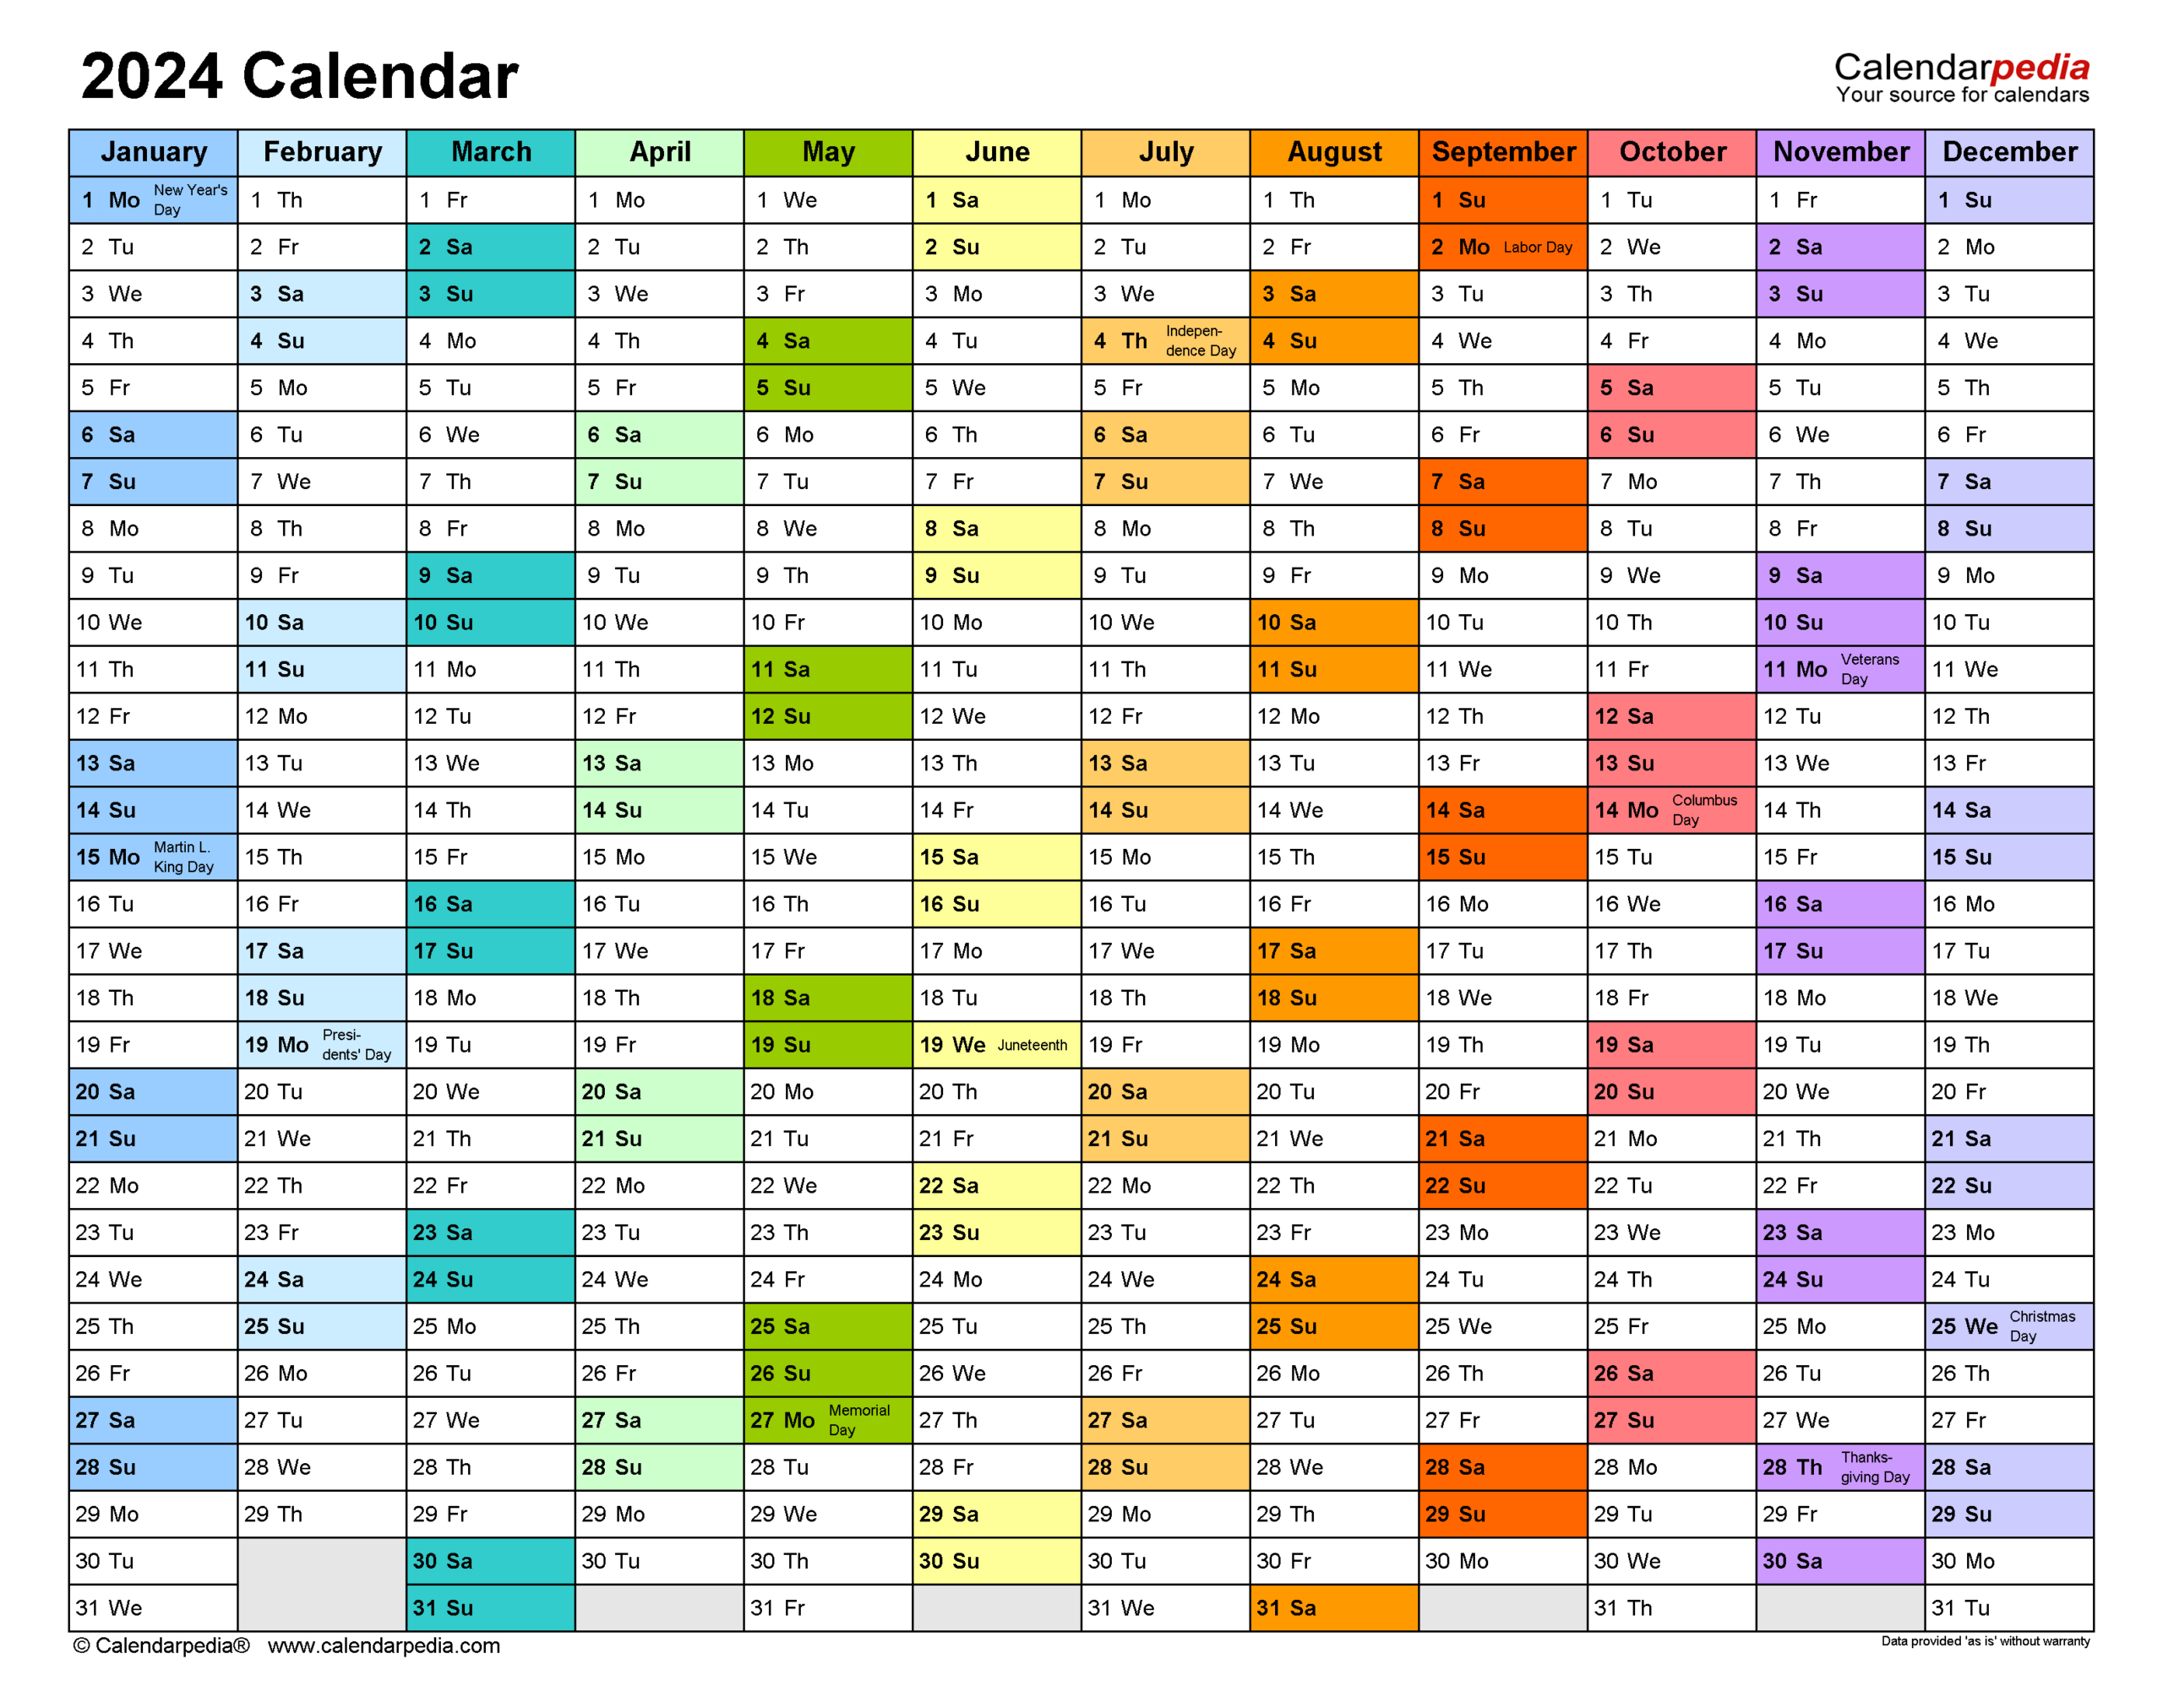 2024 Calendar - Free Printable Excel Templates - Calendarpedia | 2024 Yearly Calendar Google Sheets